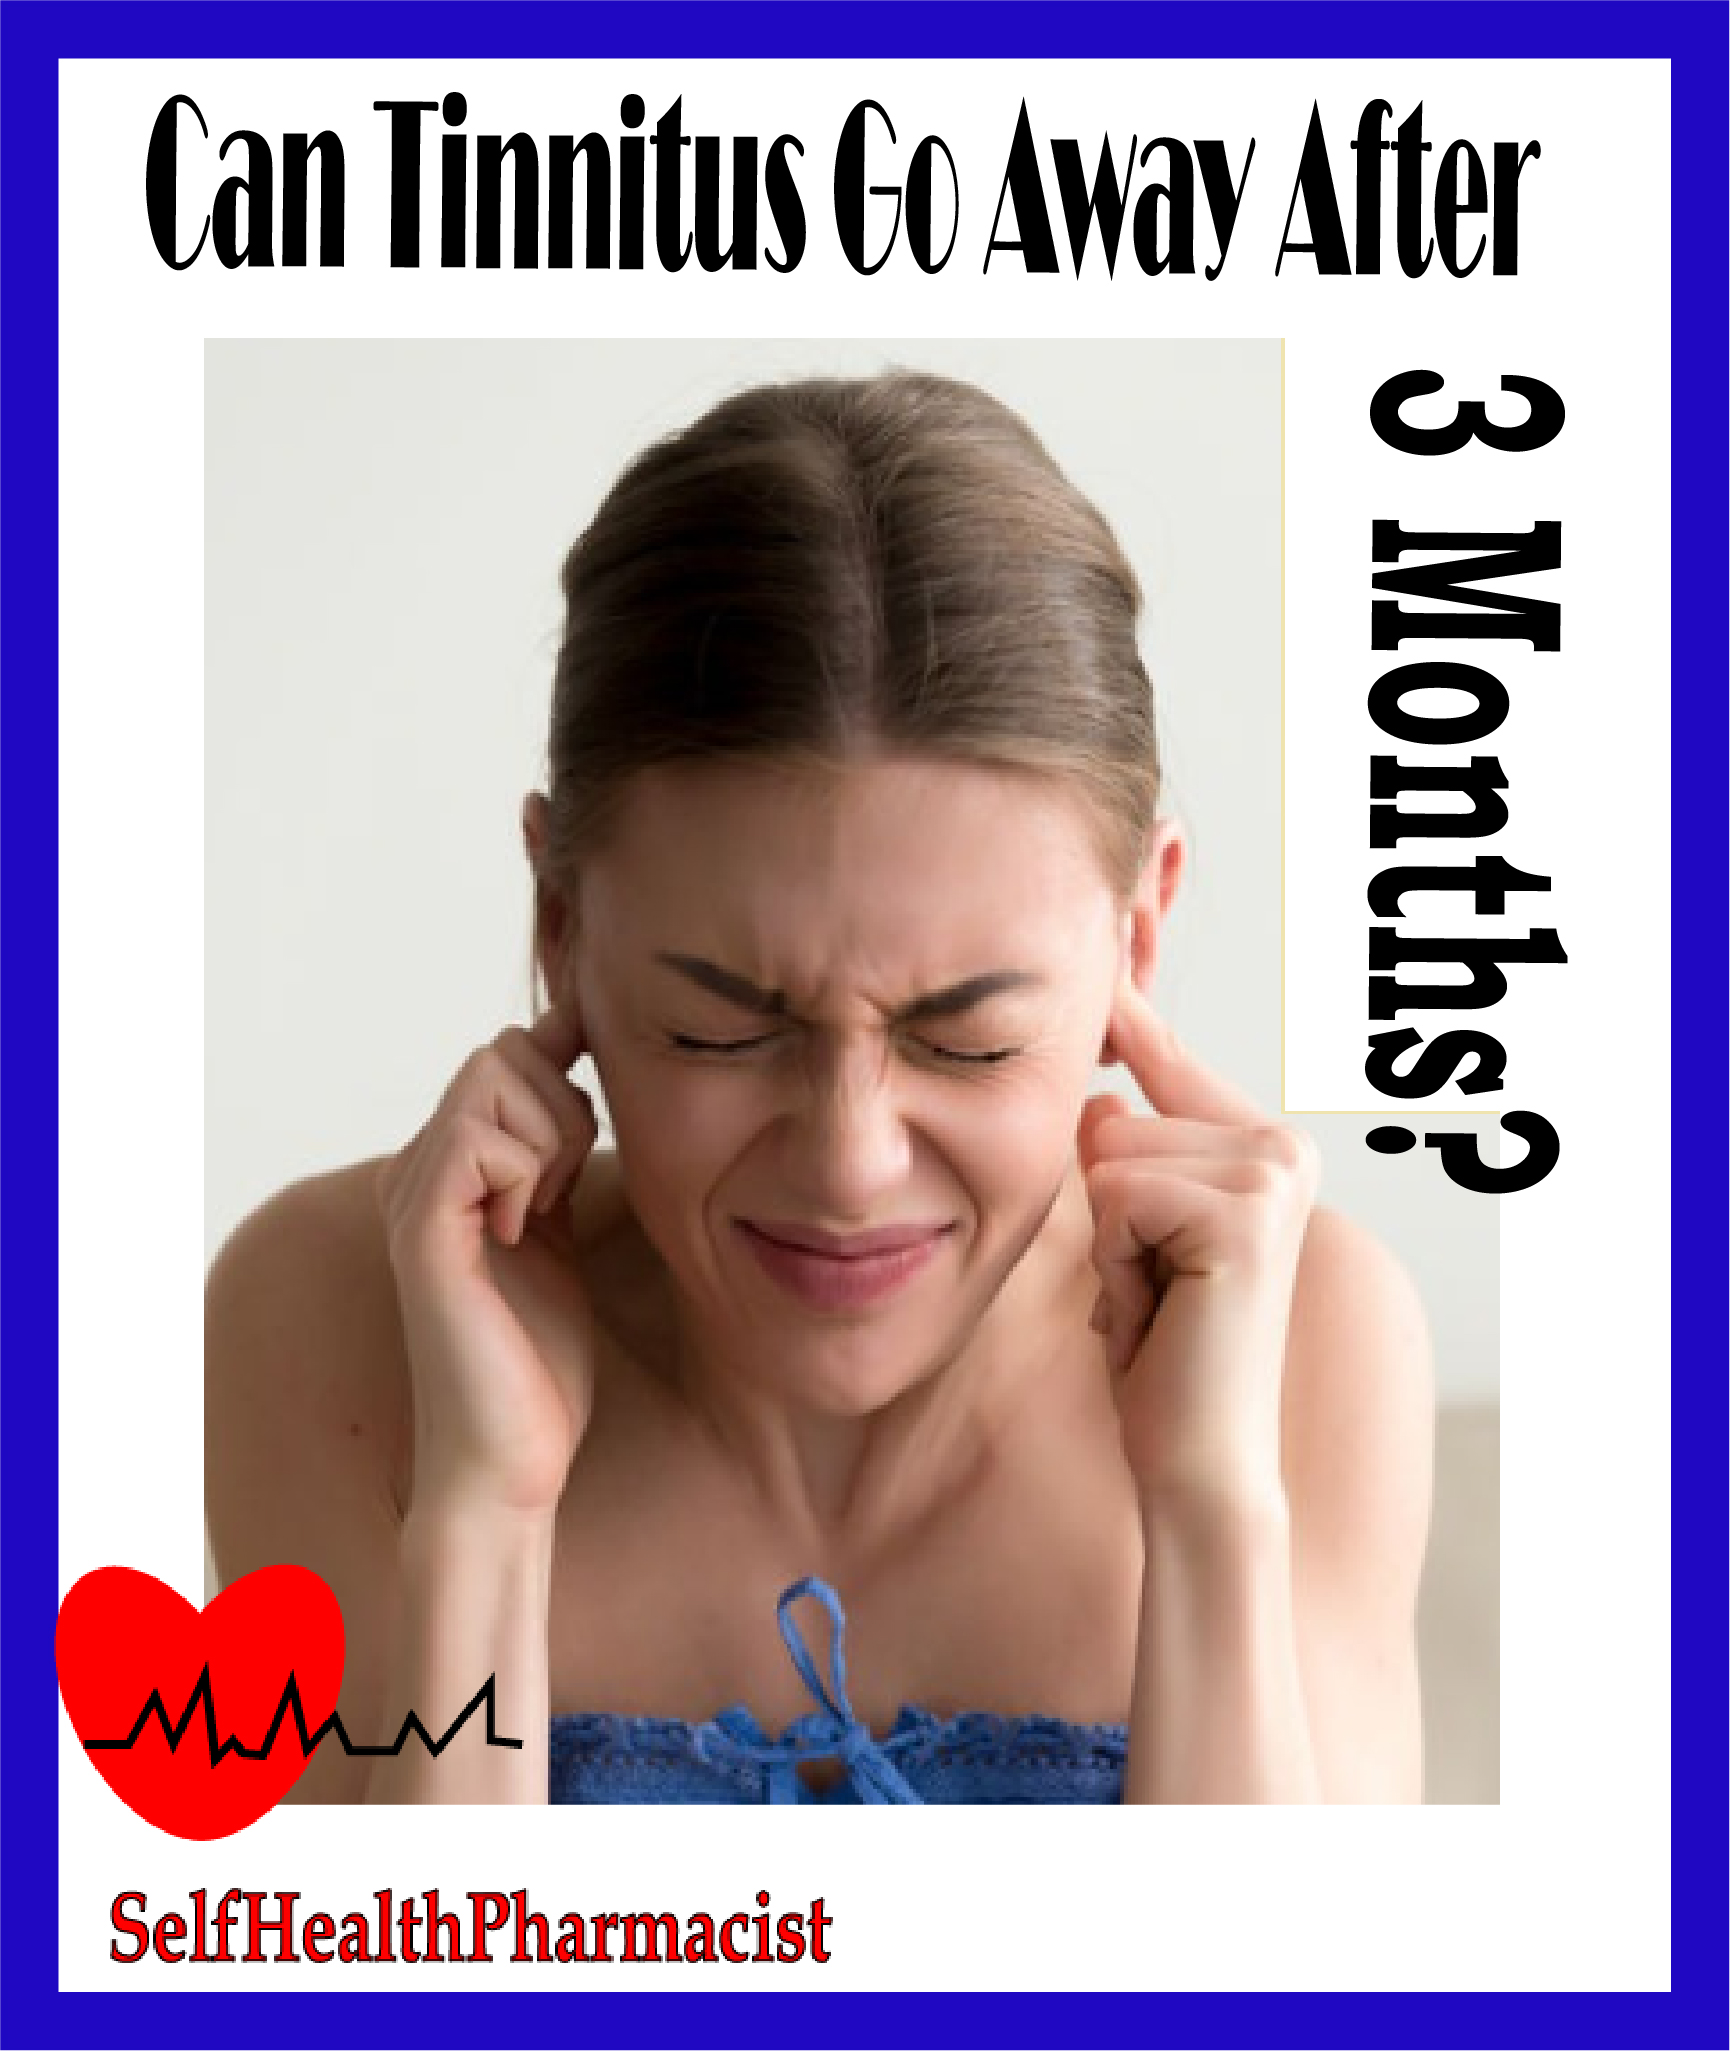 Can Tinnitus Go Away After 3 Months?